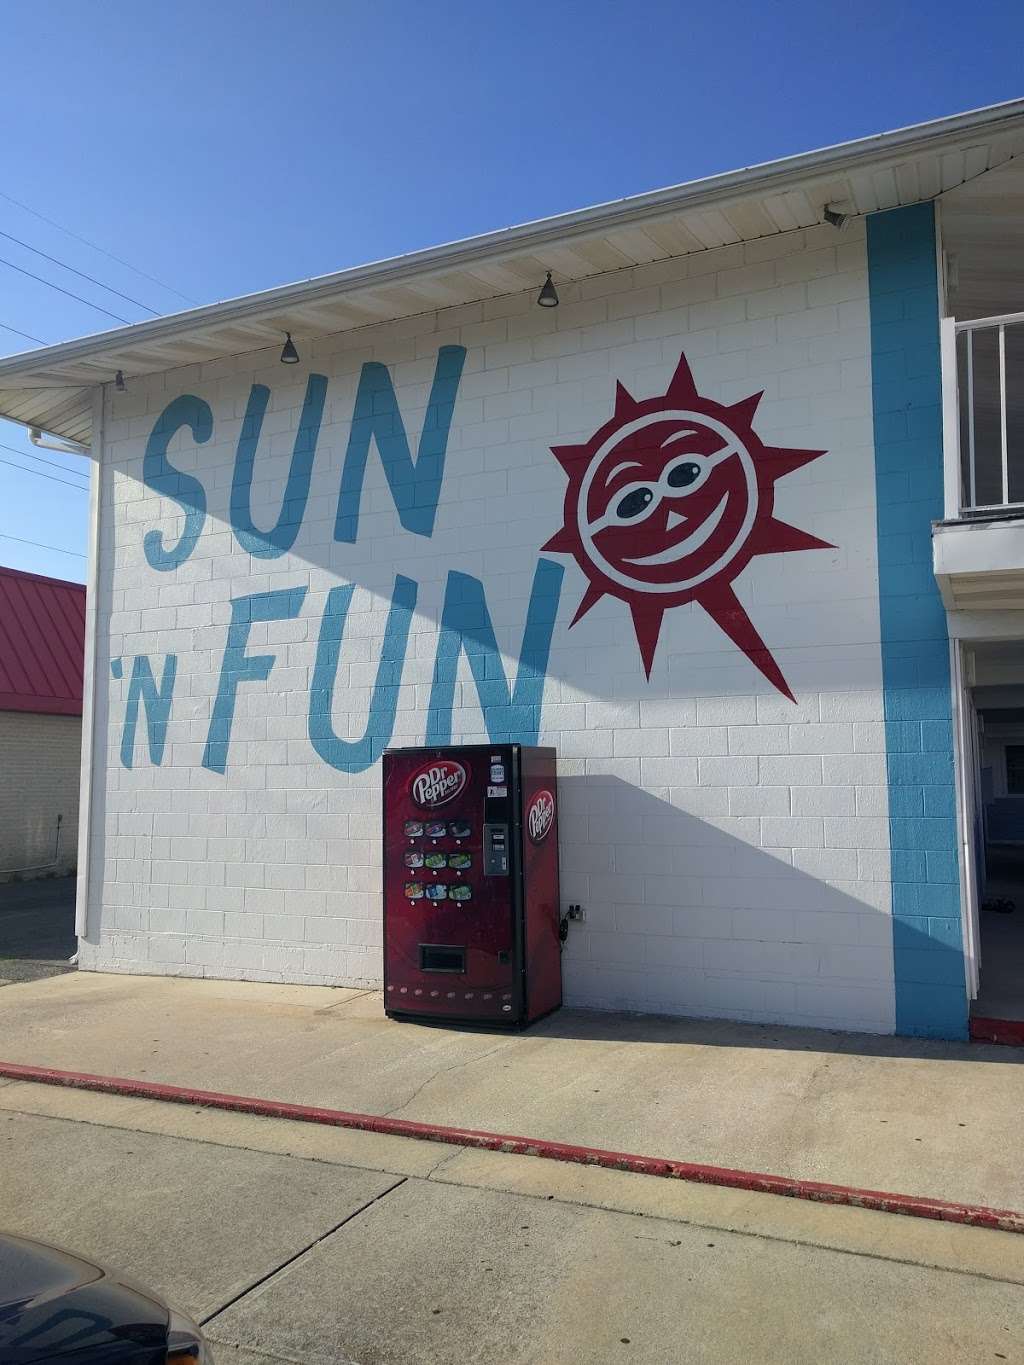 Sun n Fun Motel | 29th Street &, Baltimore Ave, Ocean City, MD 21842 | Phone: (410) 289-6060